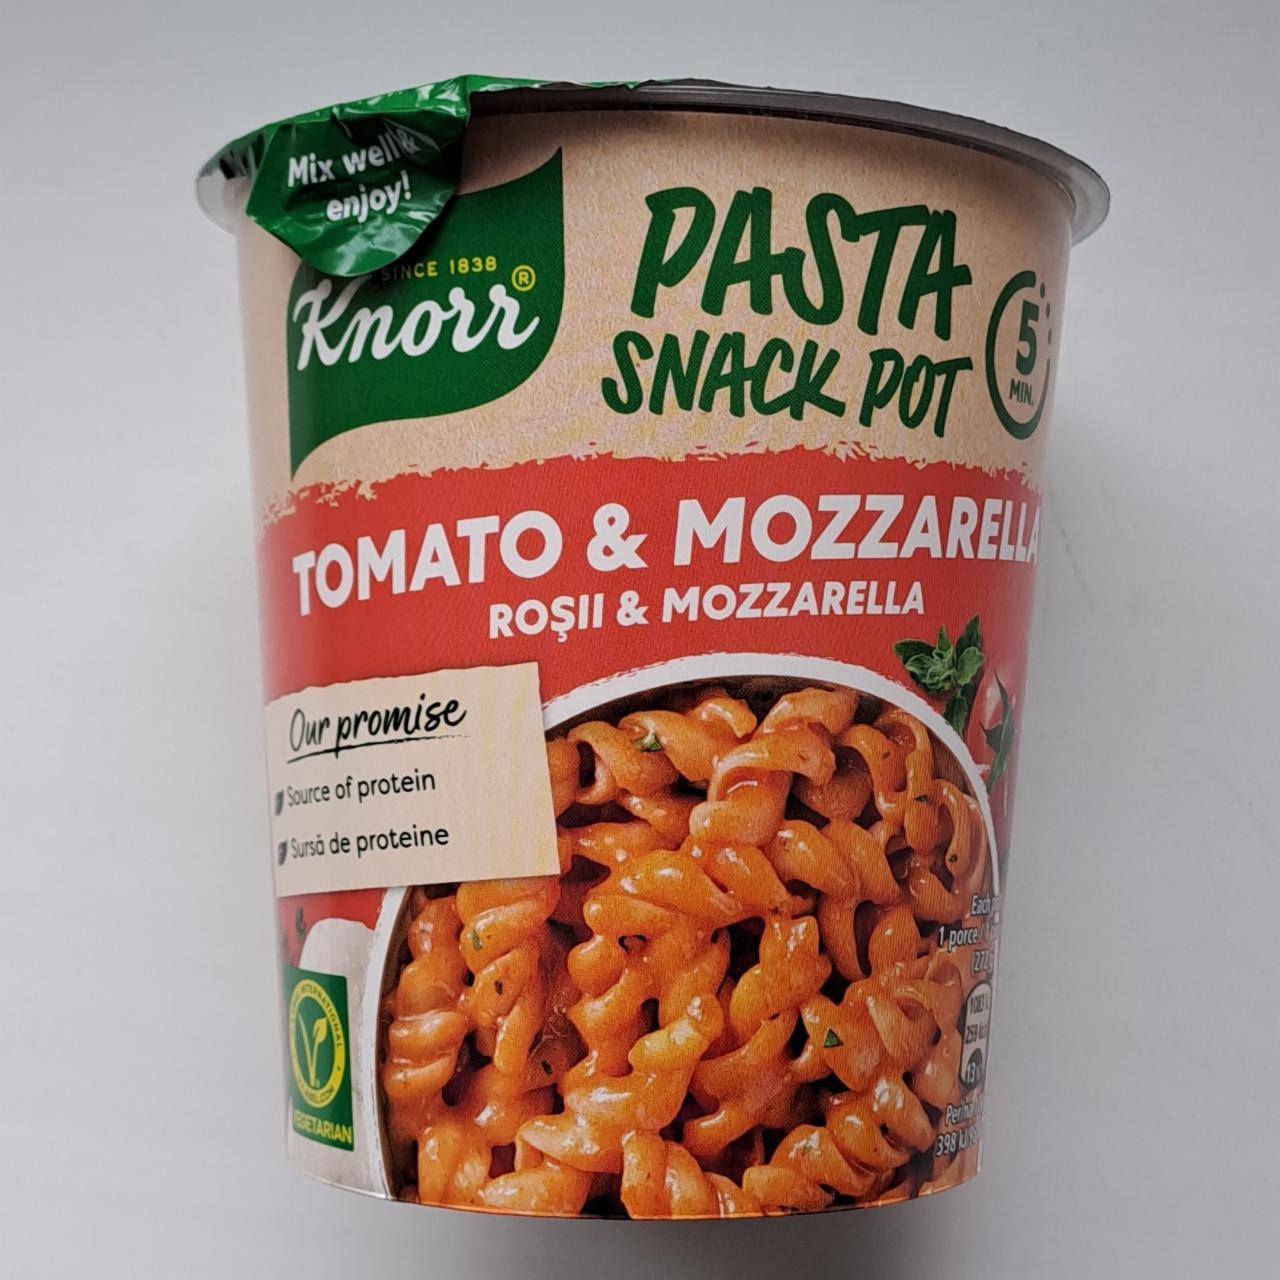 Fotografie - Pasta snack pot Tomato & Mozzarella Knorr